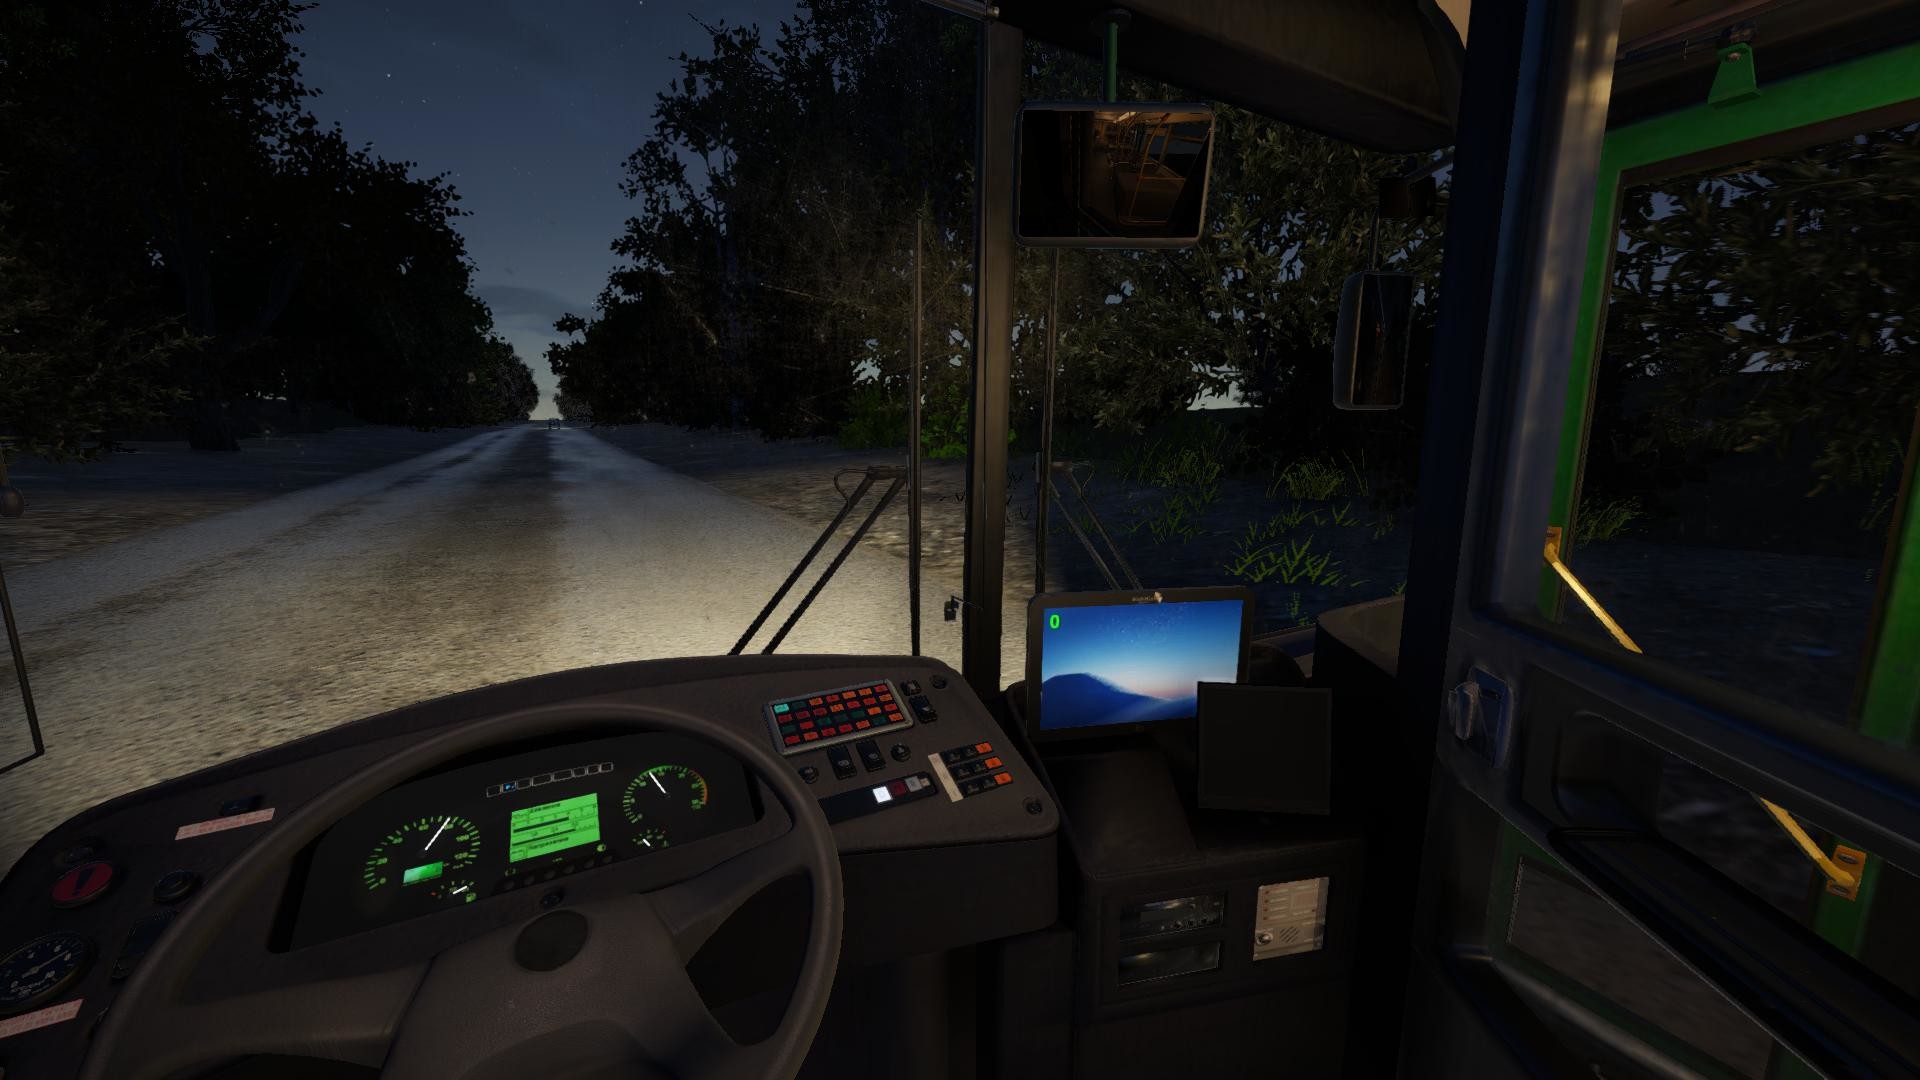 Bus Driver Simulator - Modern City Bus screenshot